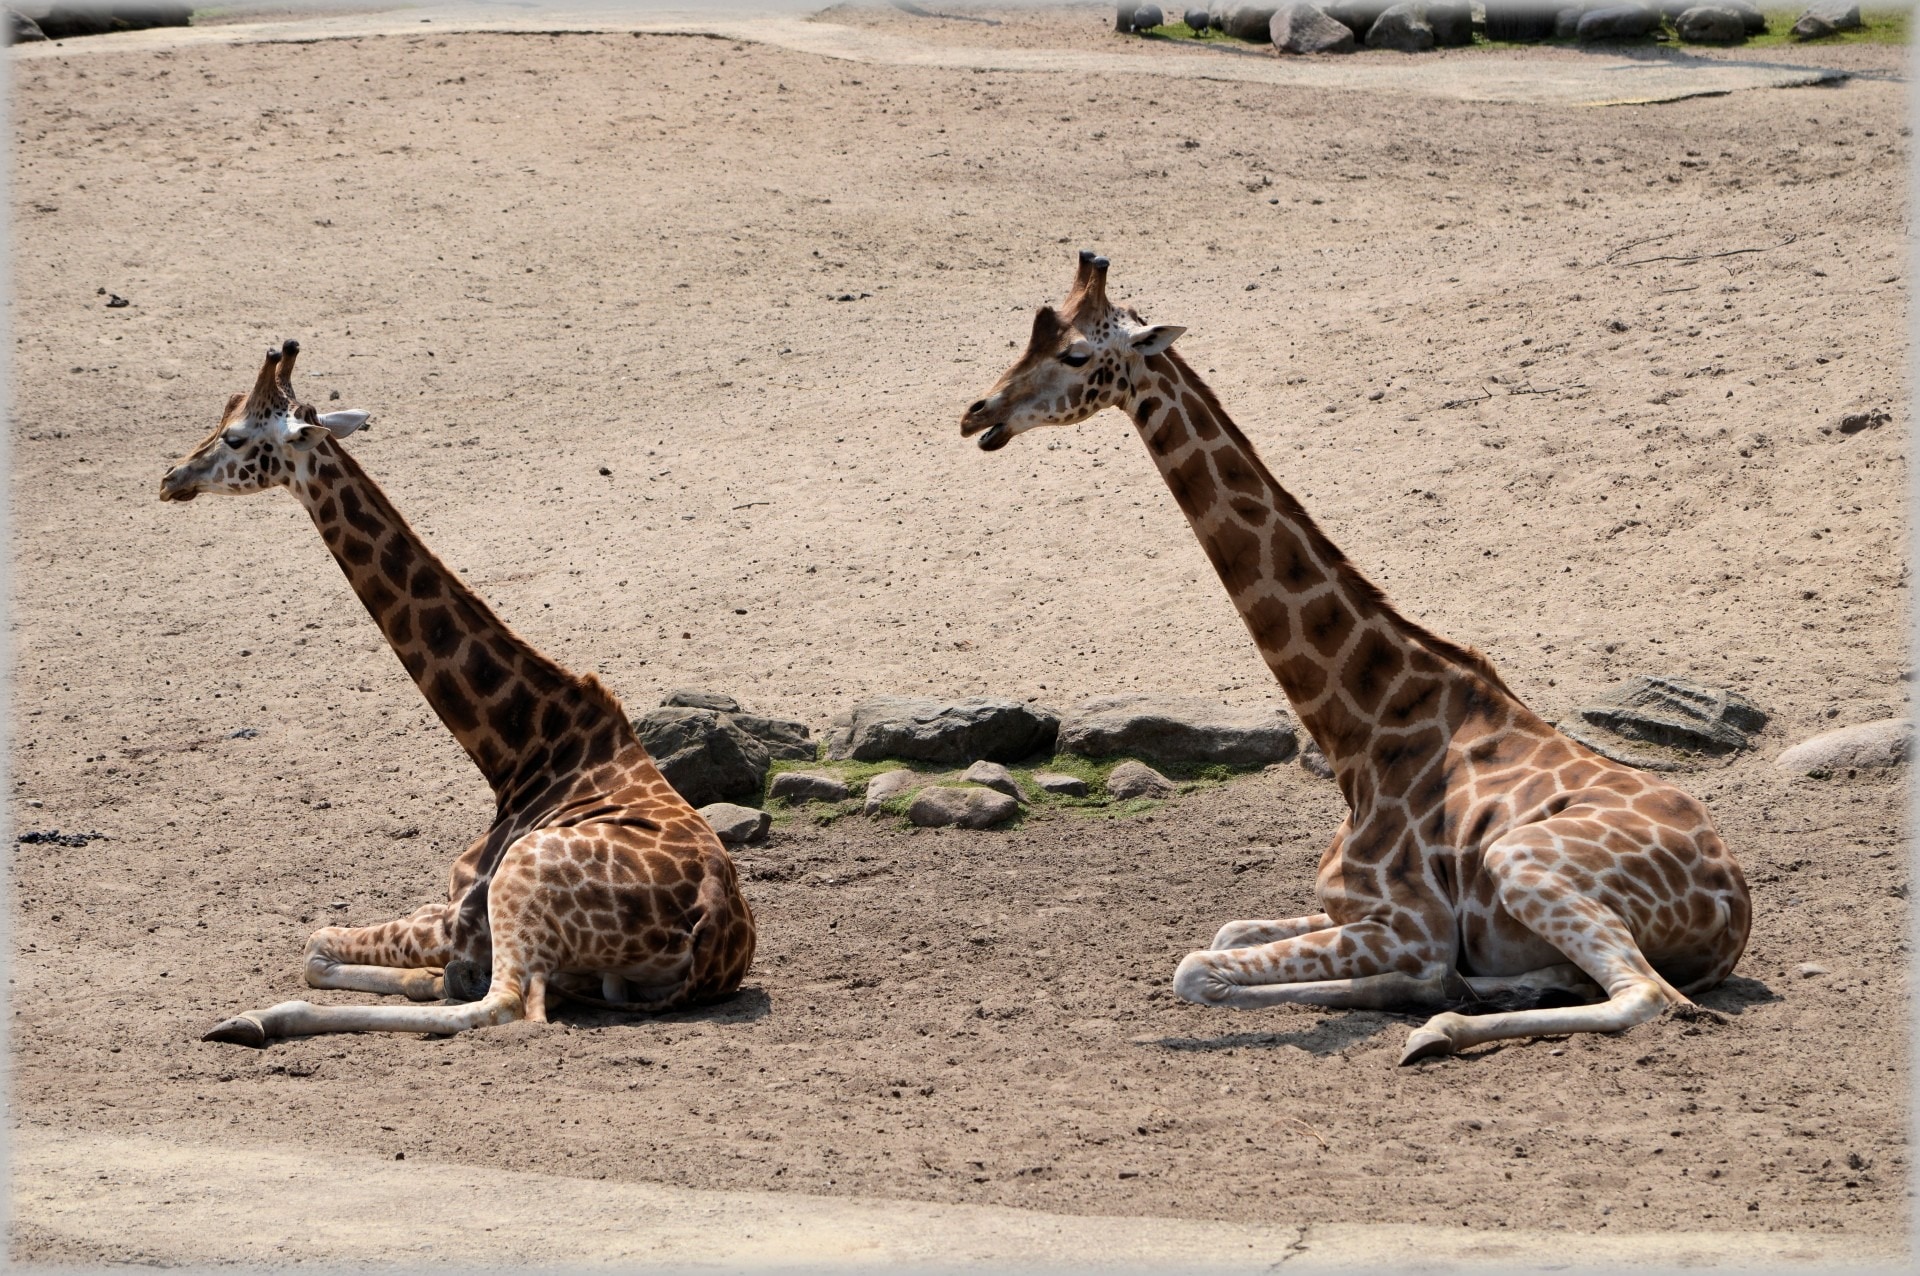 two giraffes on sand field